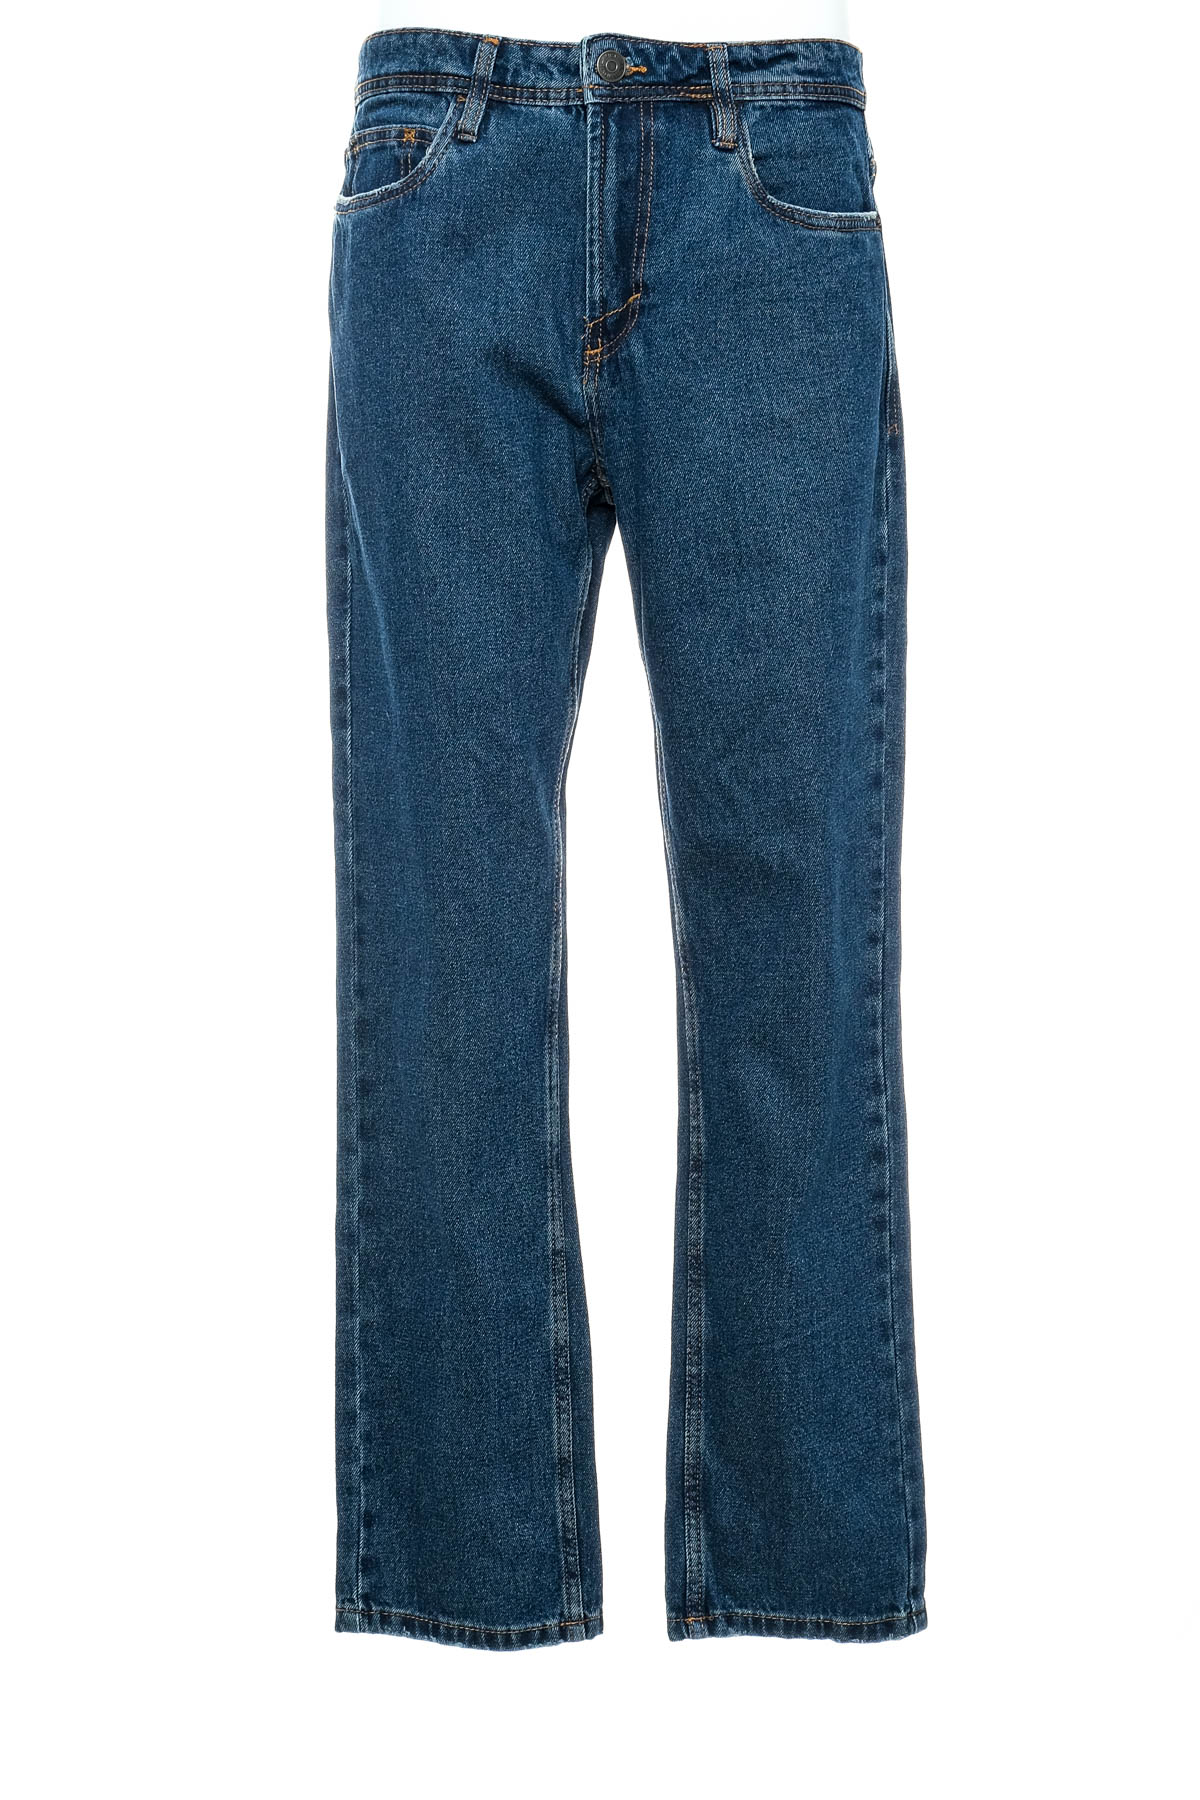 Men's jeans - Sinsay - 0